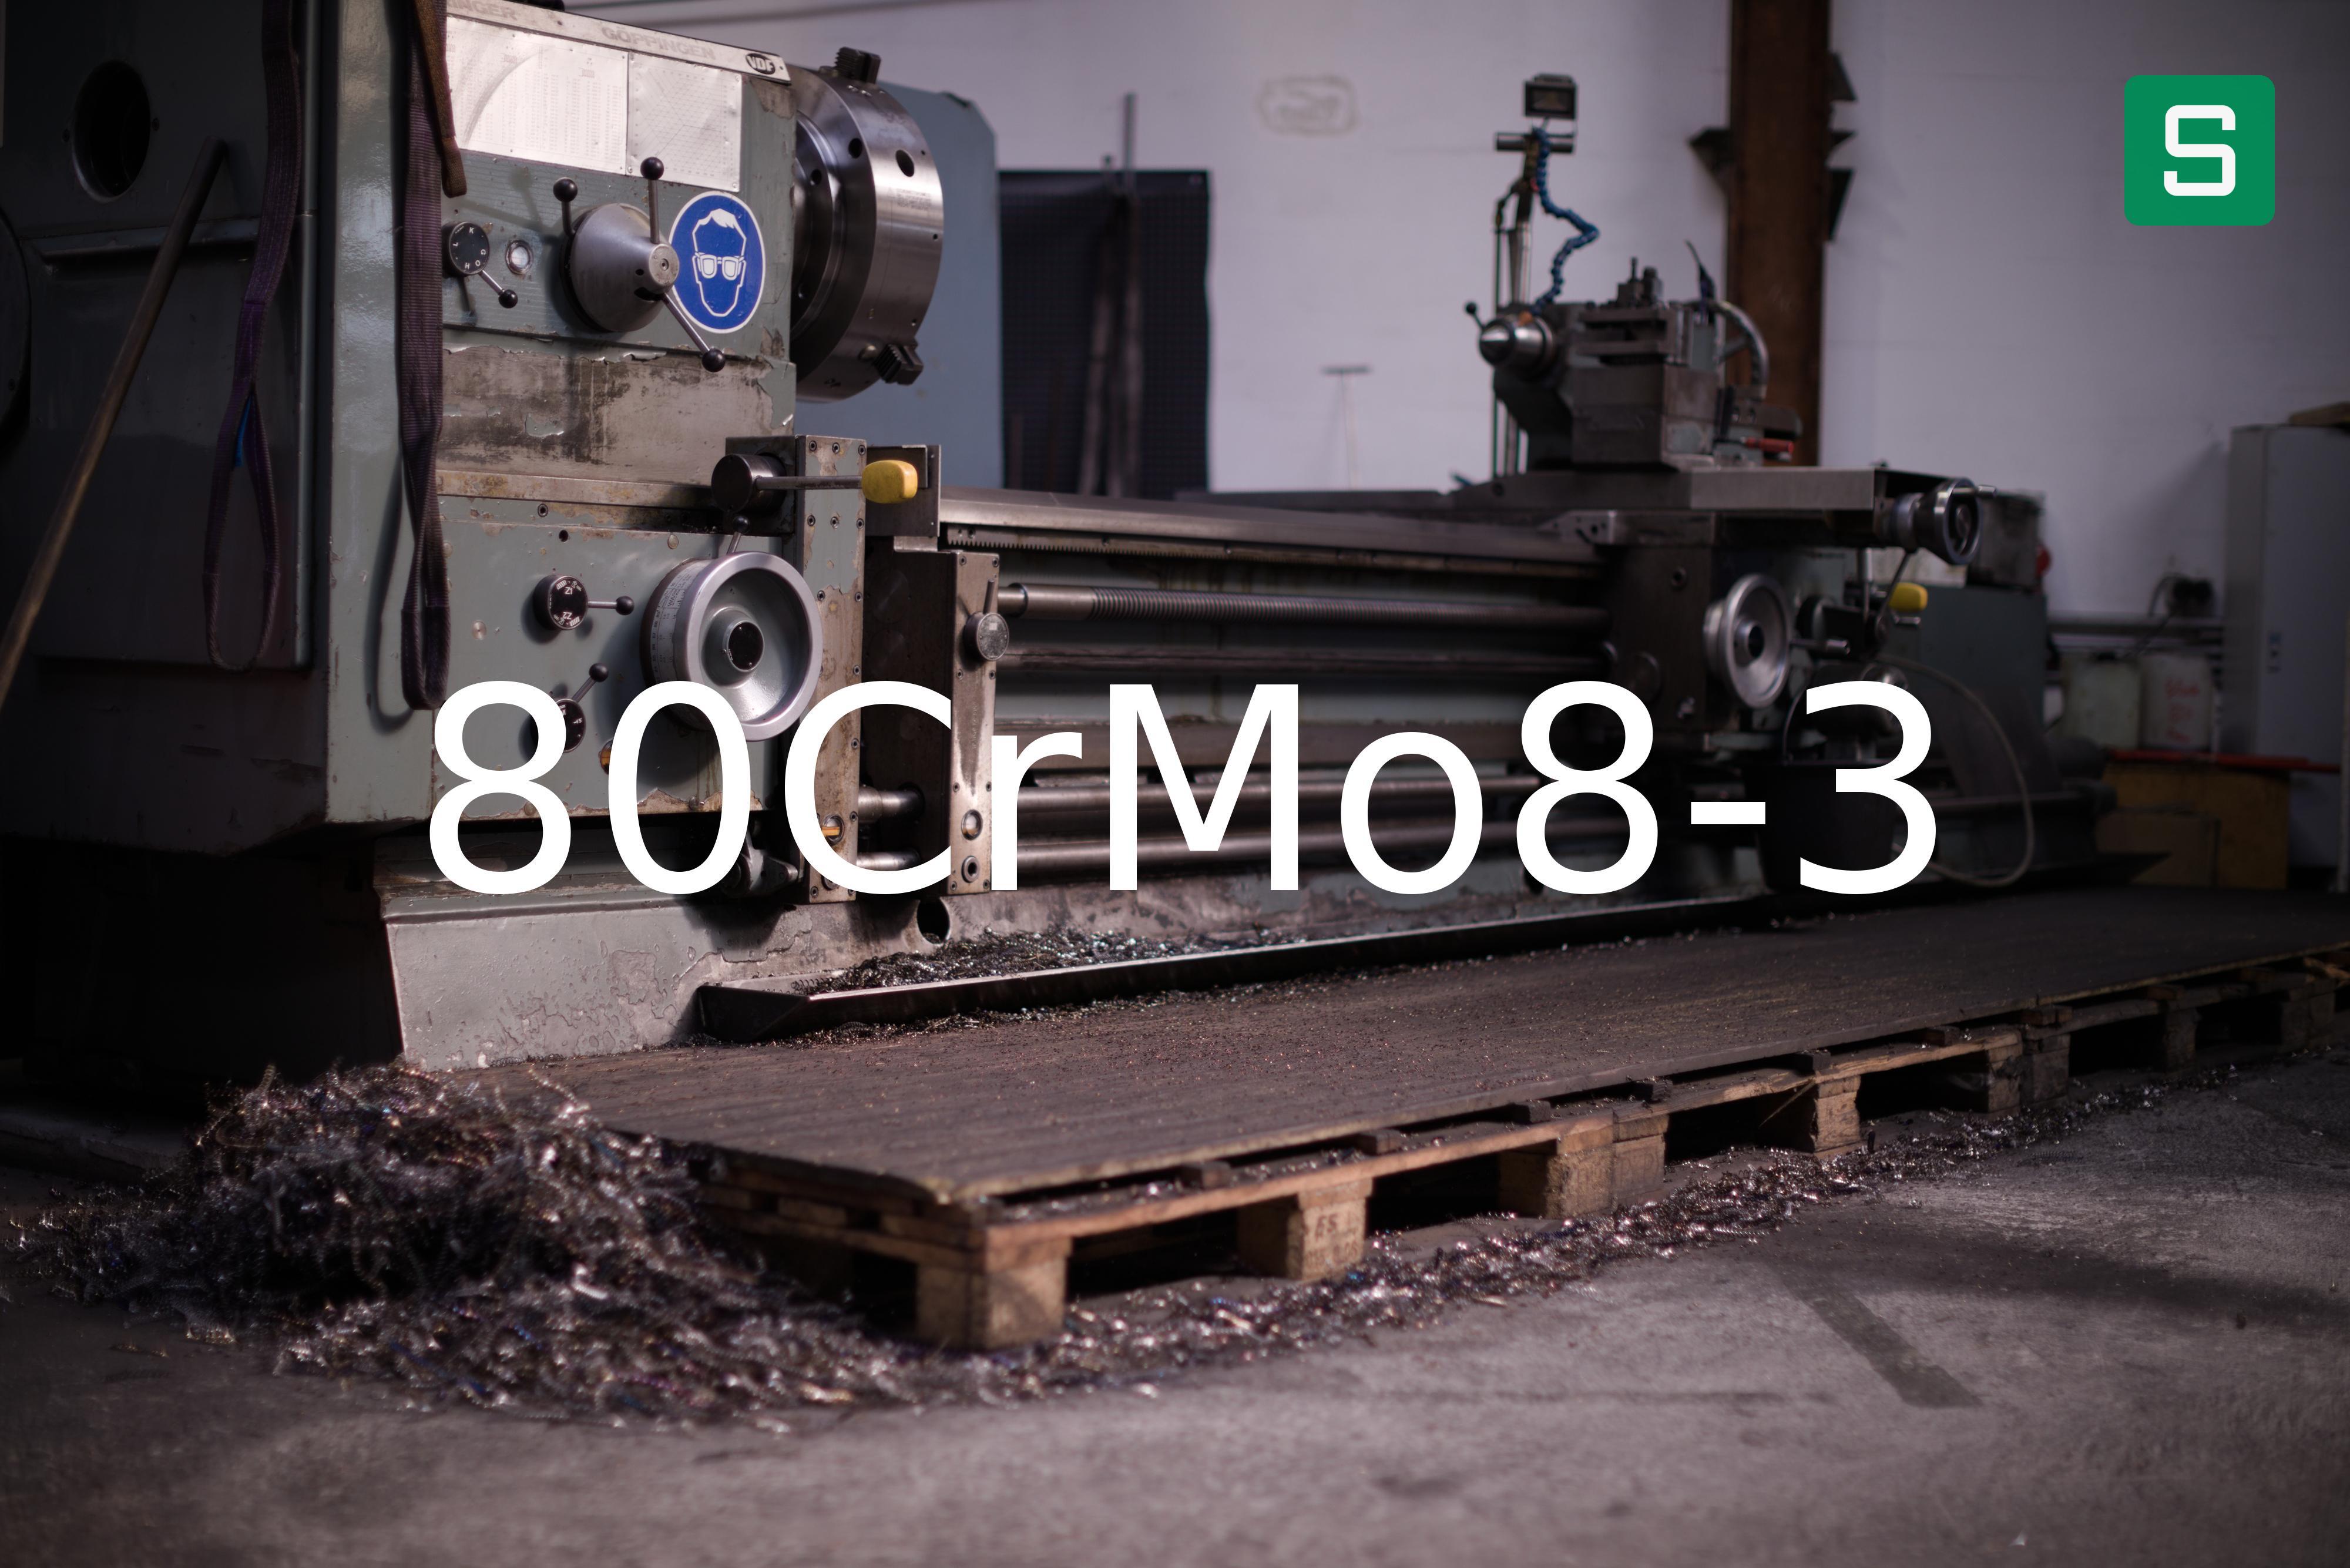 Steel Material: 80CrMo8-3